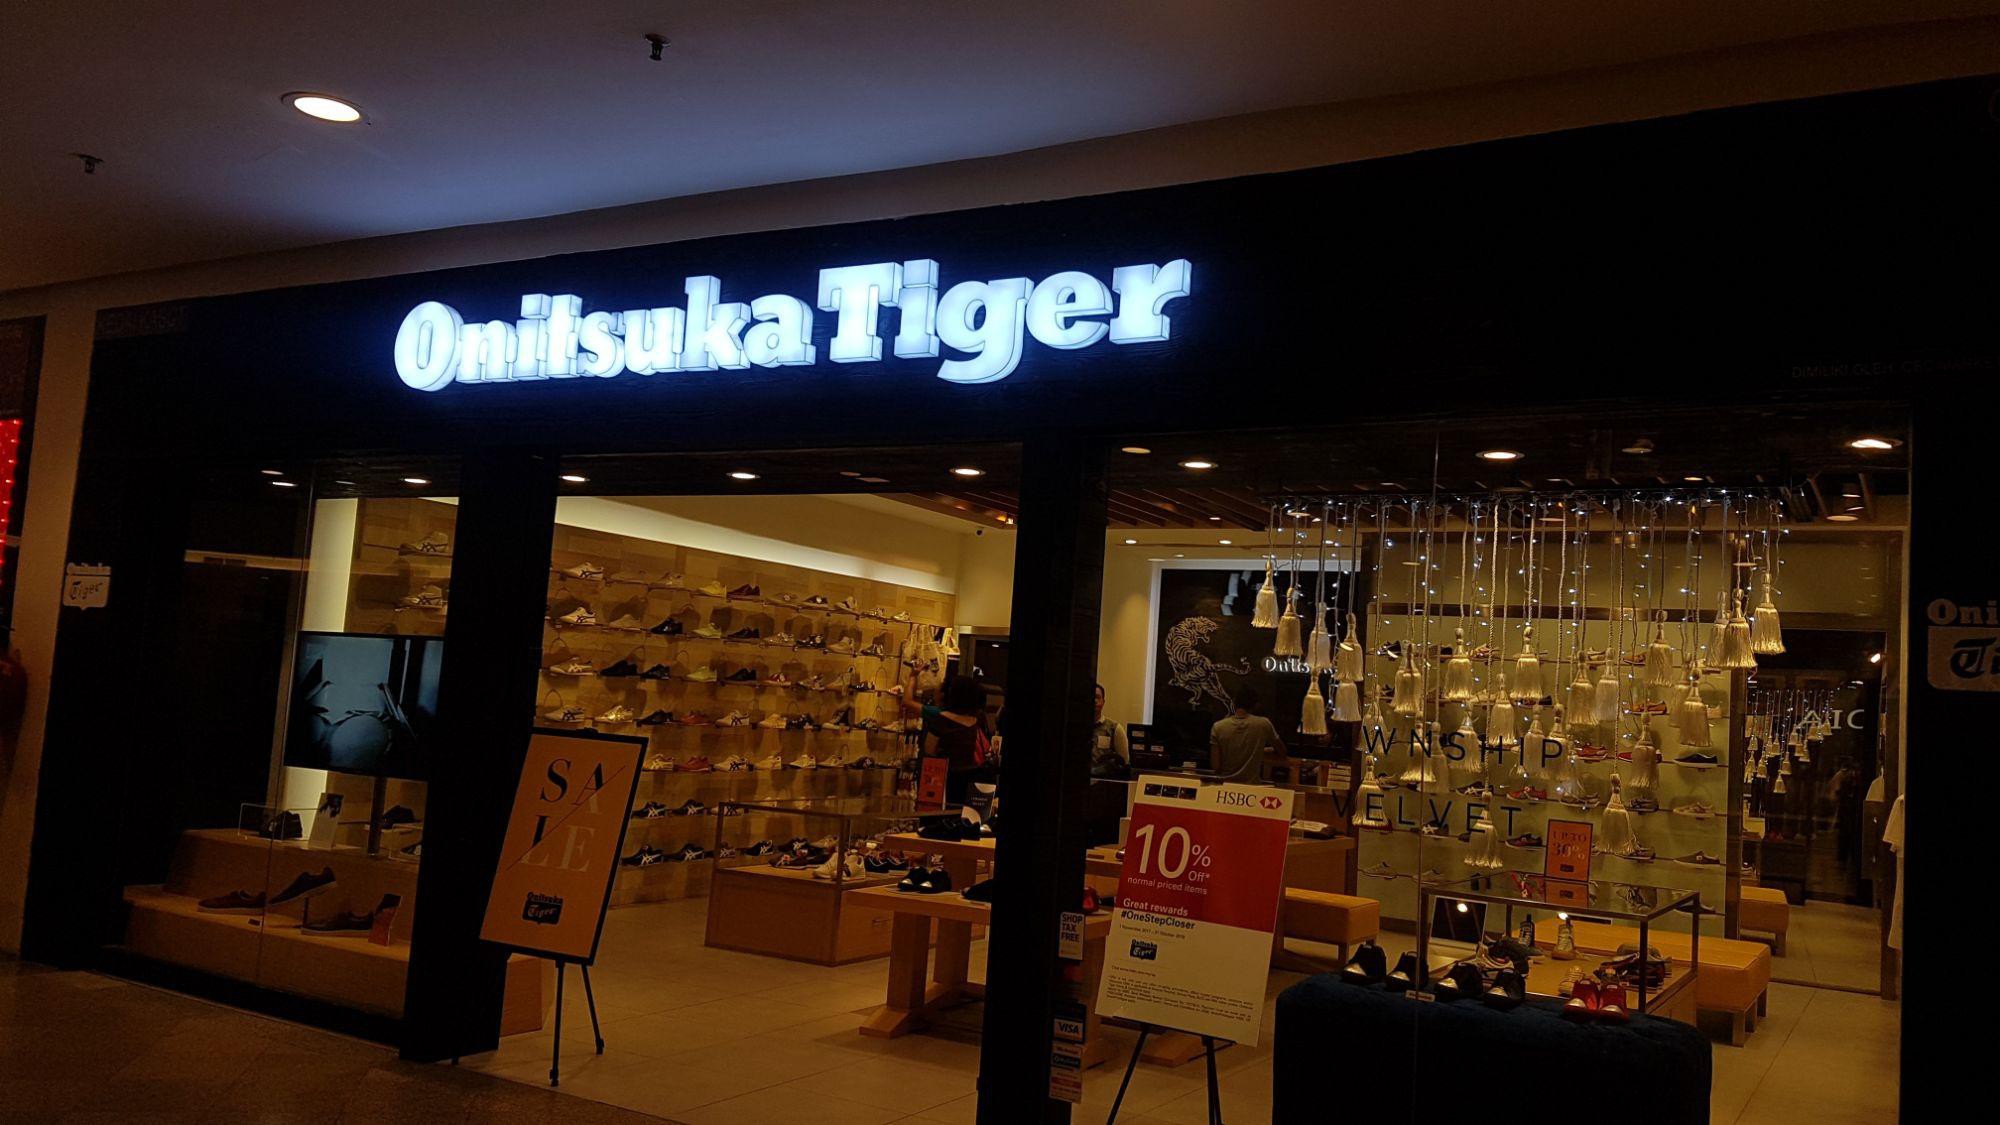 onitsuka tiger megamall